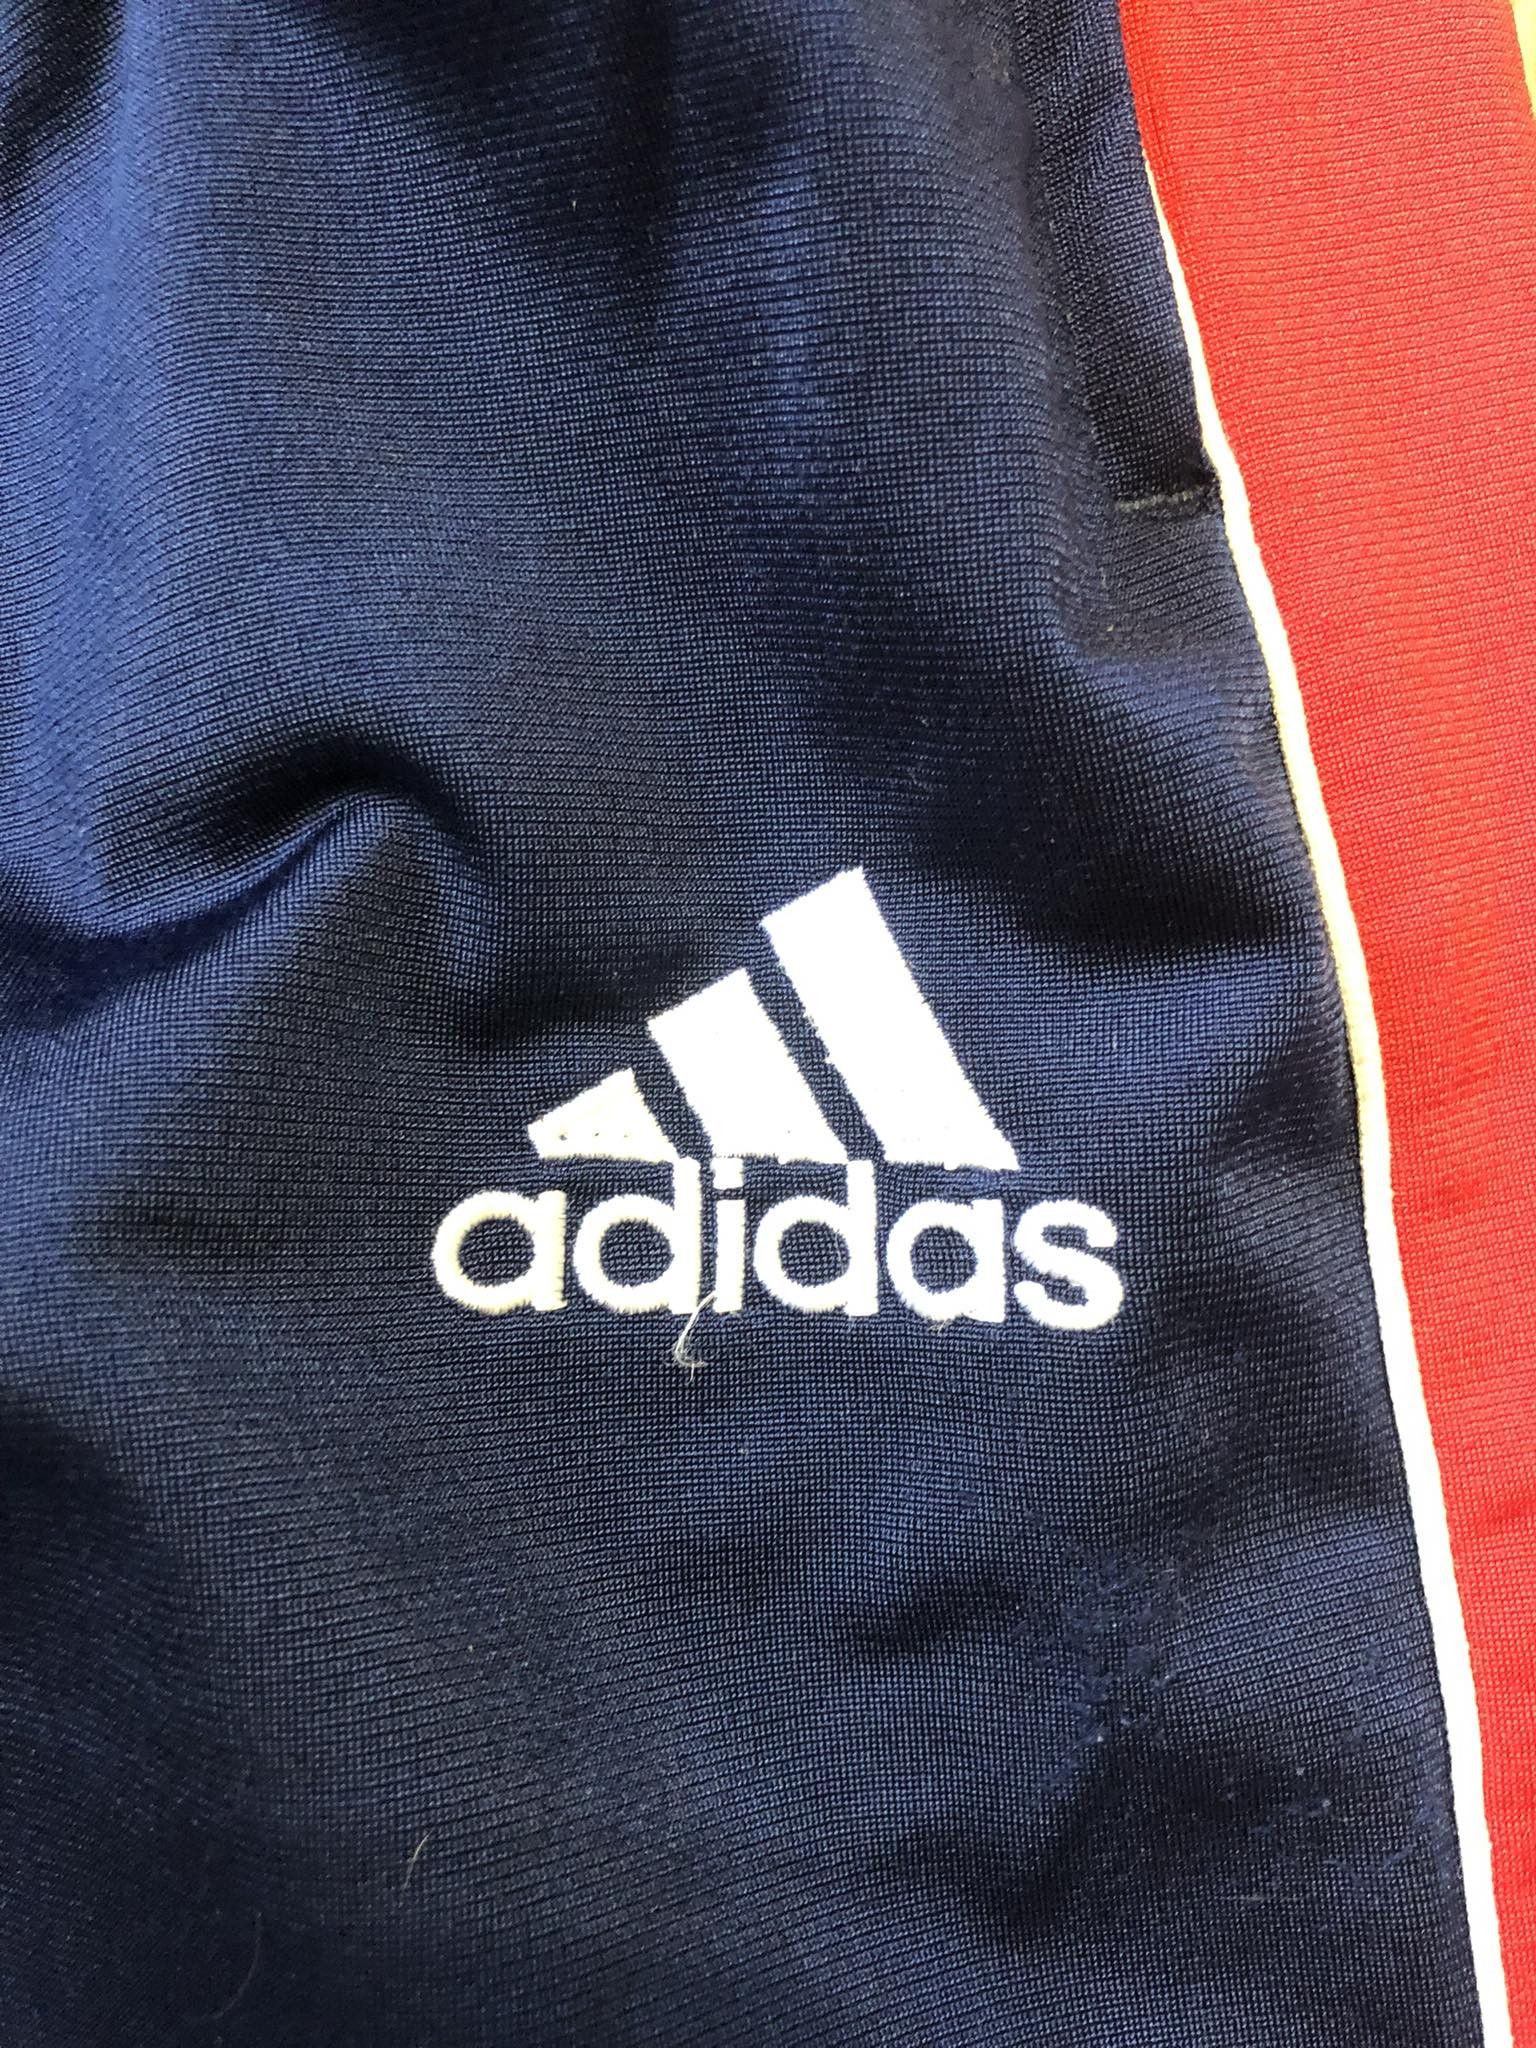 Adidas Adidas Olympia Toppen sweatpants vintage size M? 70s 80s Size US 32 / EU 48 - 4 Thumbnail